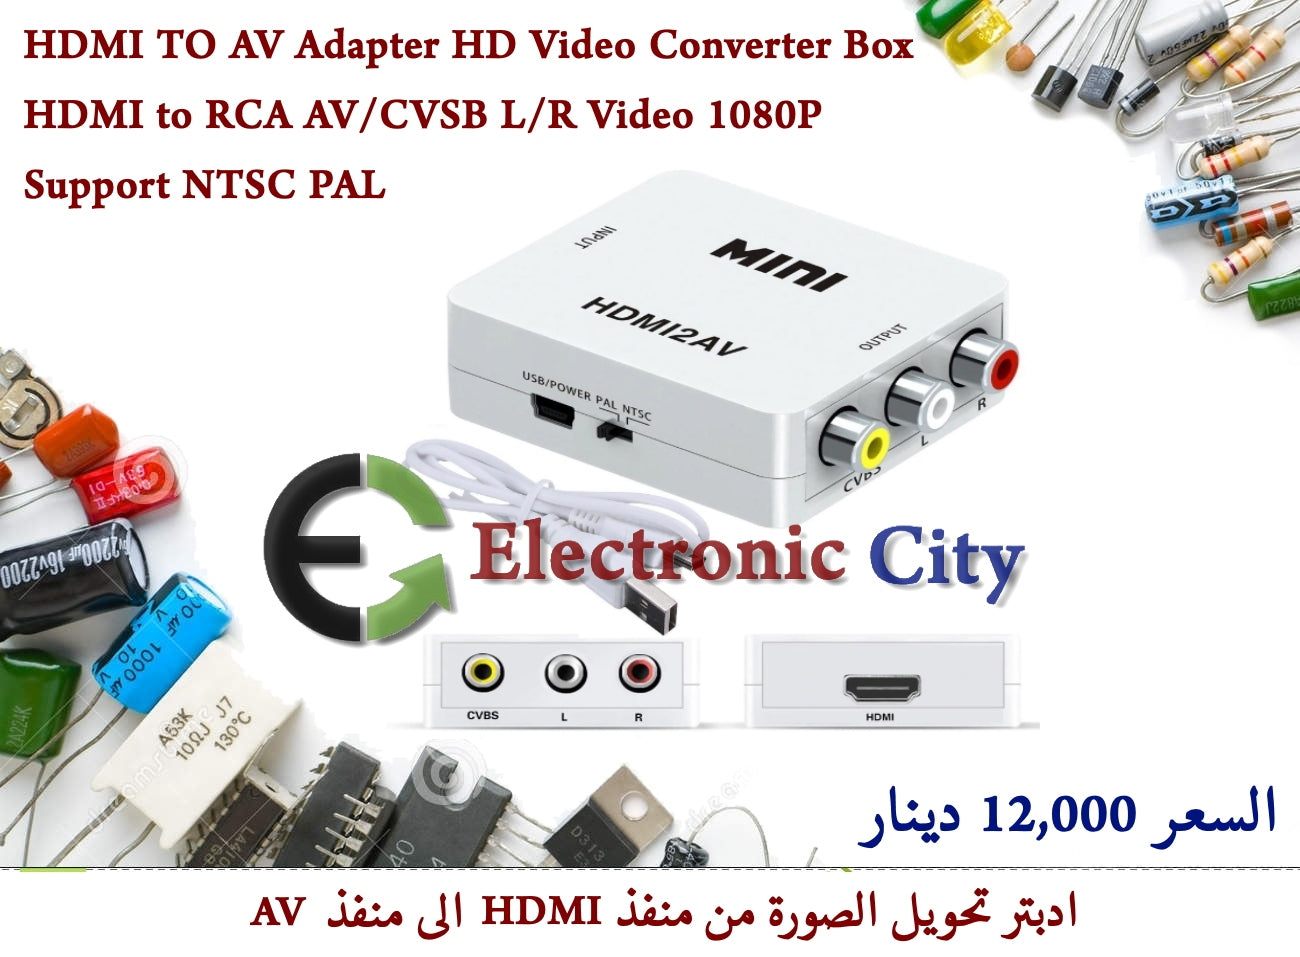 HDMI TO AV Adapter HD Video Converter Box HDMI to RCA